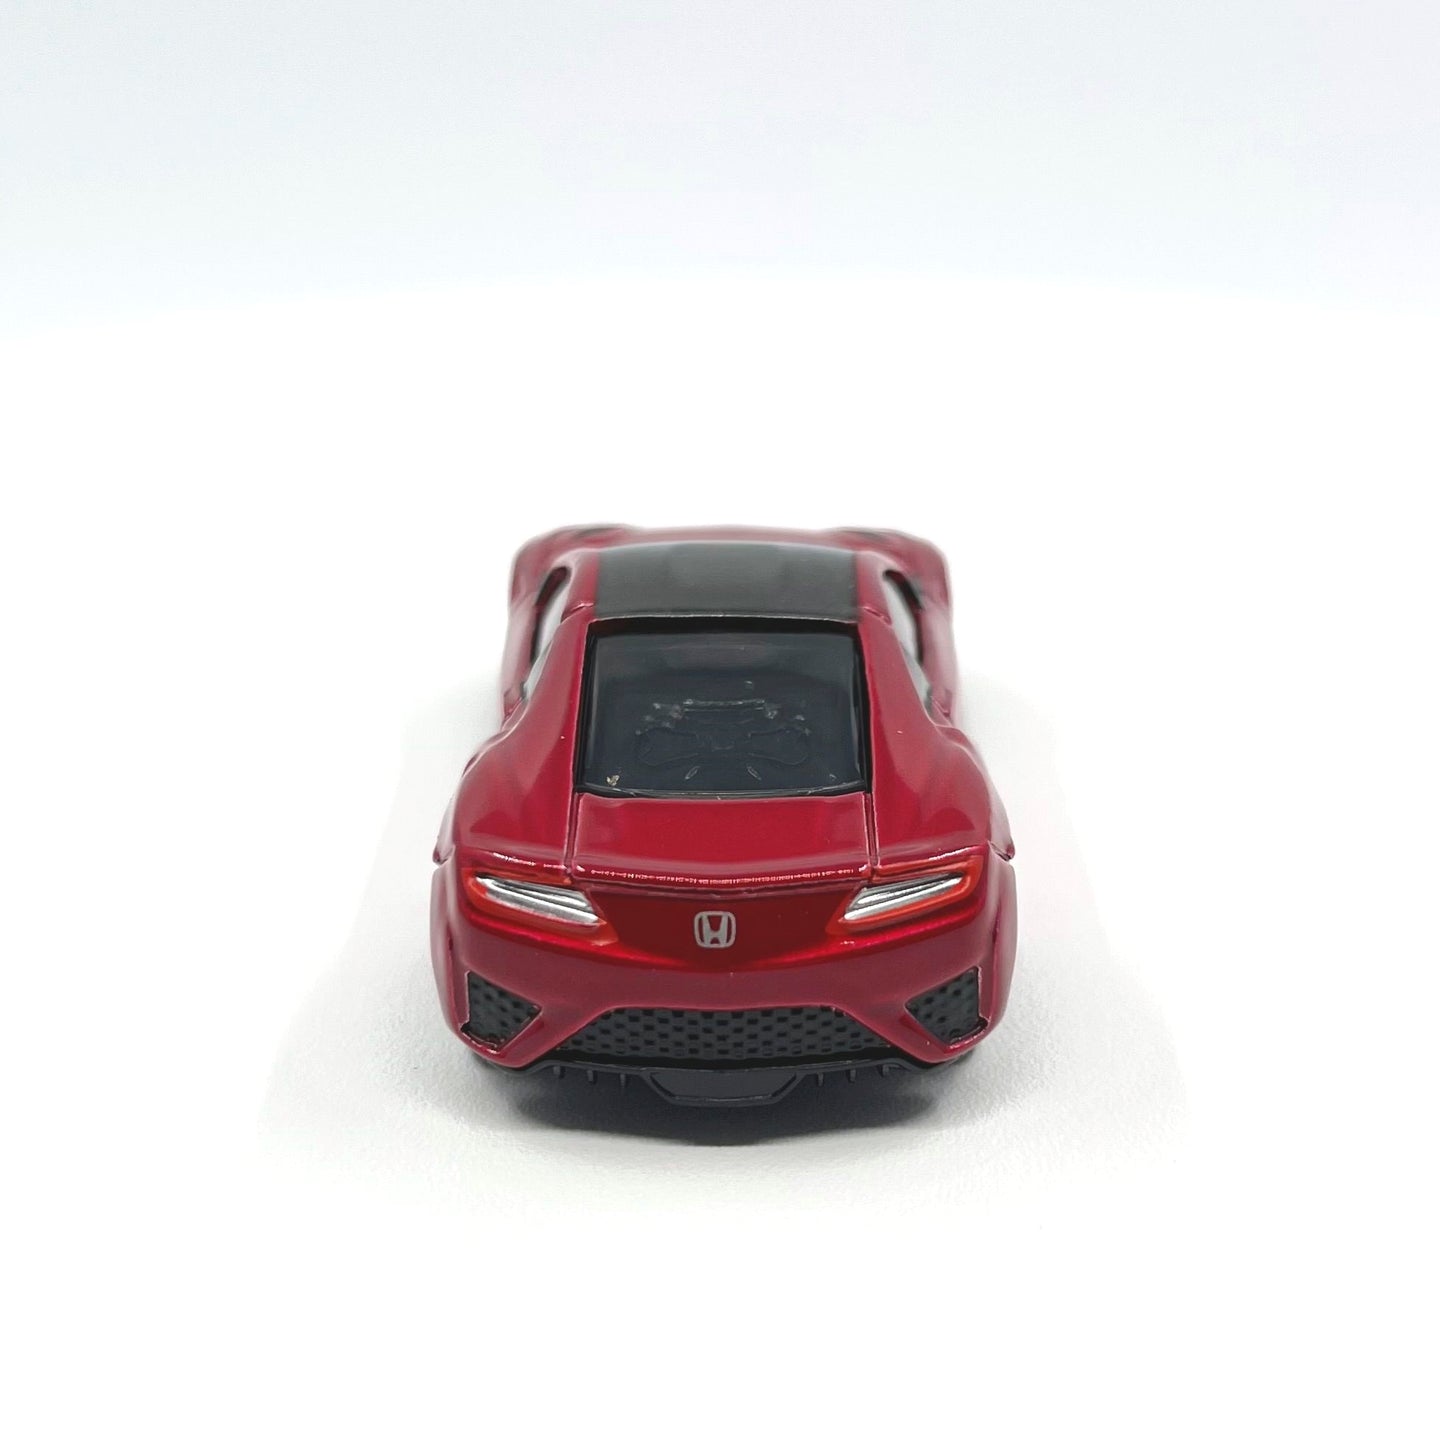 1:62 Honda NSX Alloy Tomica Diecast Car Model by Takara Tomy